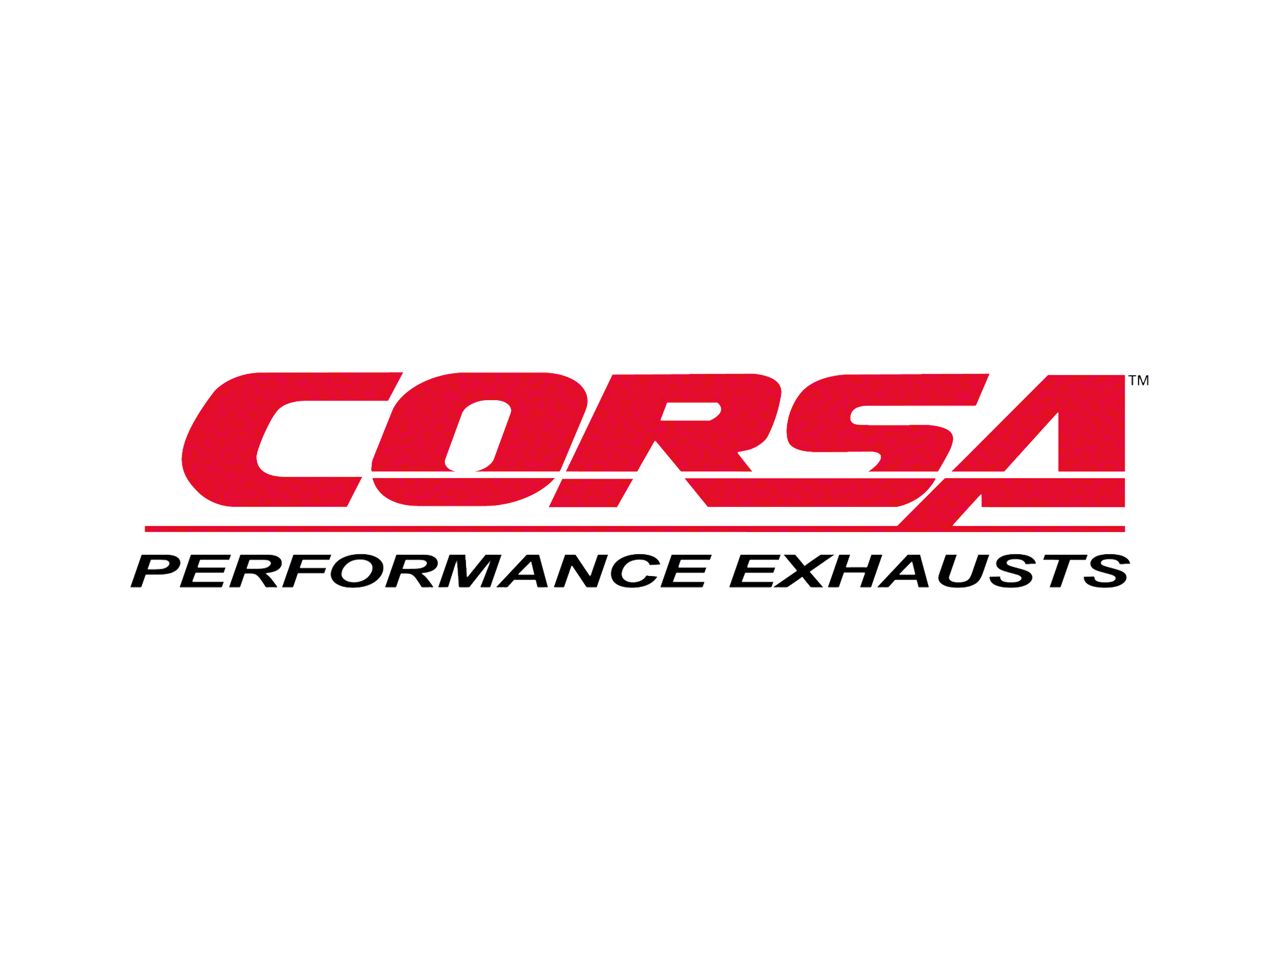 Corsa Performance Parts